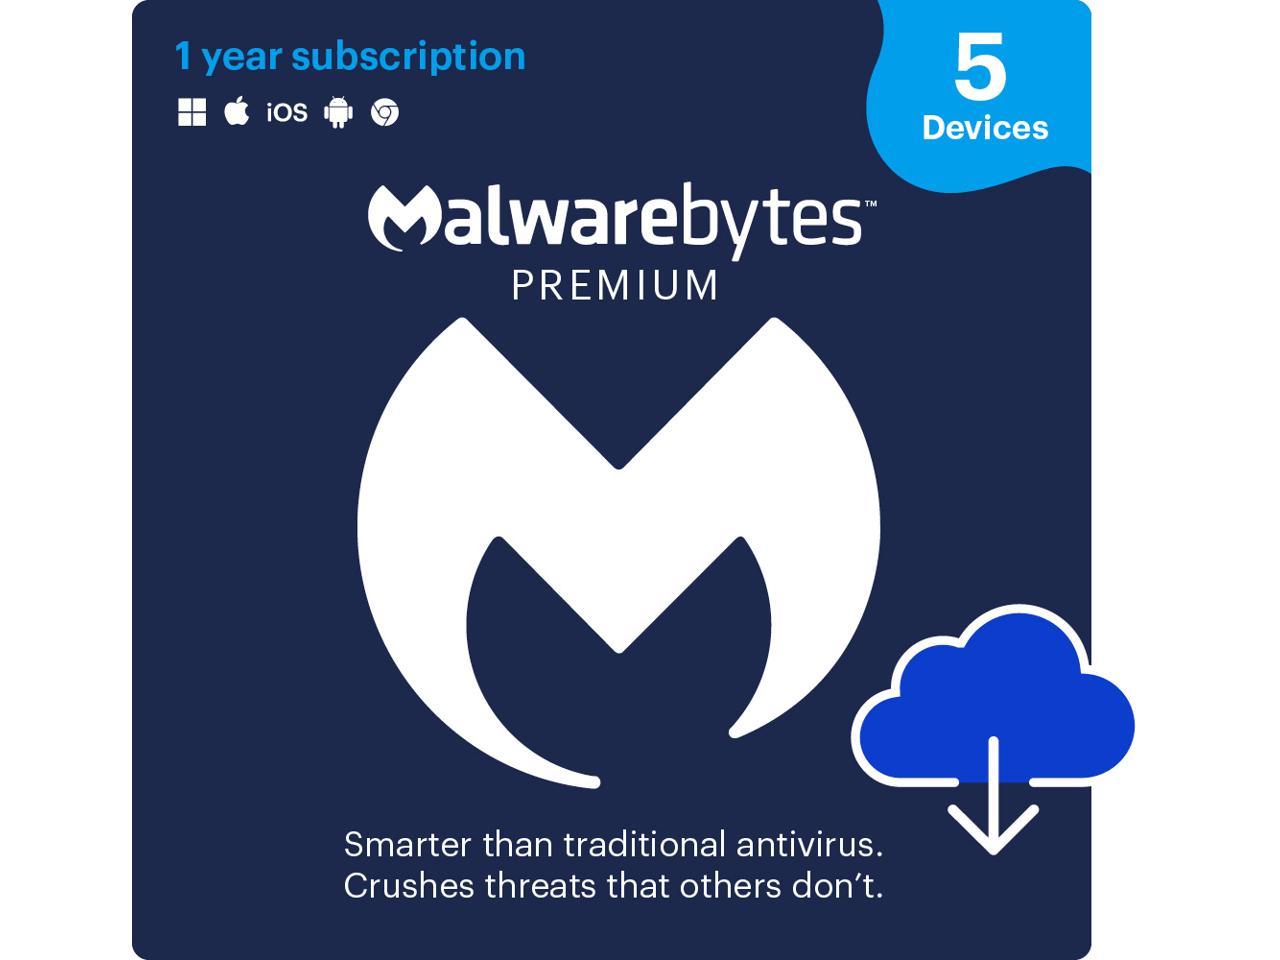 Malwarebytes Premium 4.5 Latest Version - 5 Devices / 1 Year - Download Apply $20 promo Newegg $30